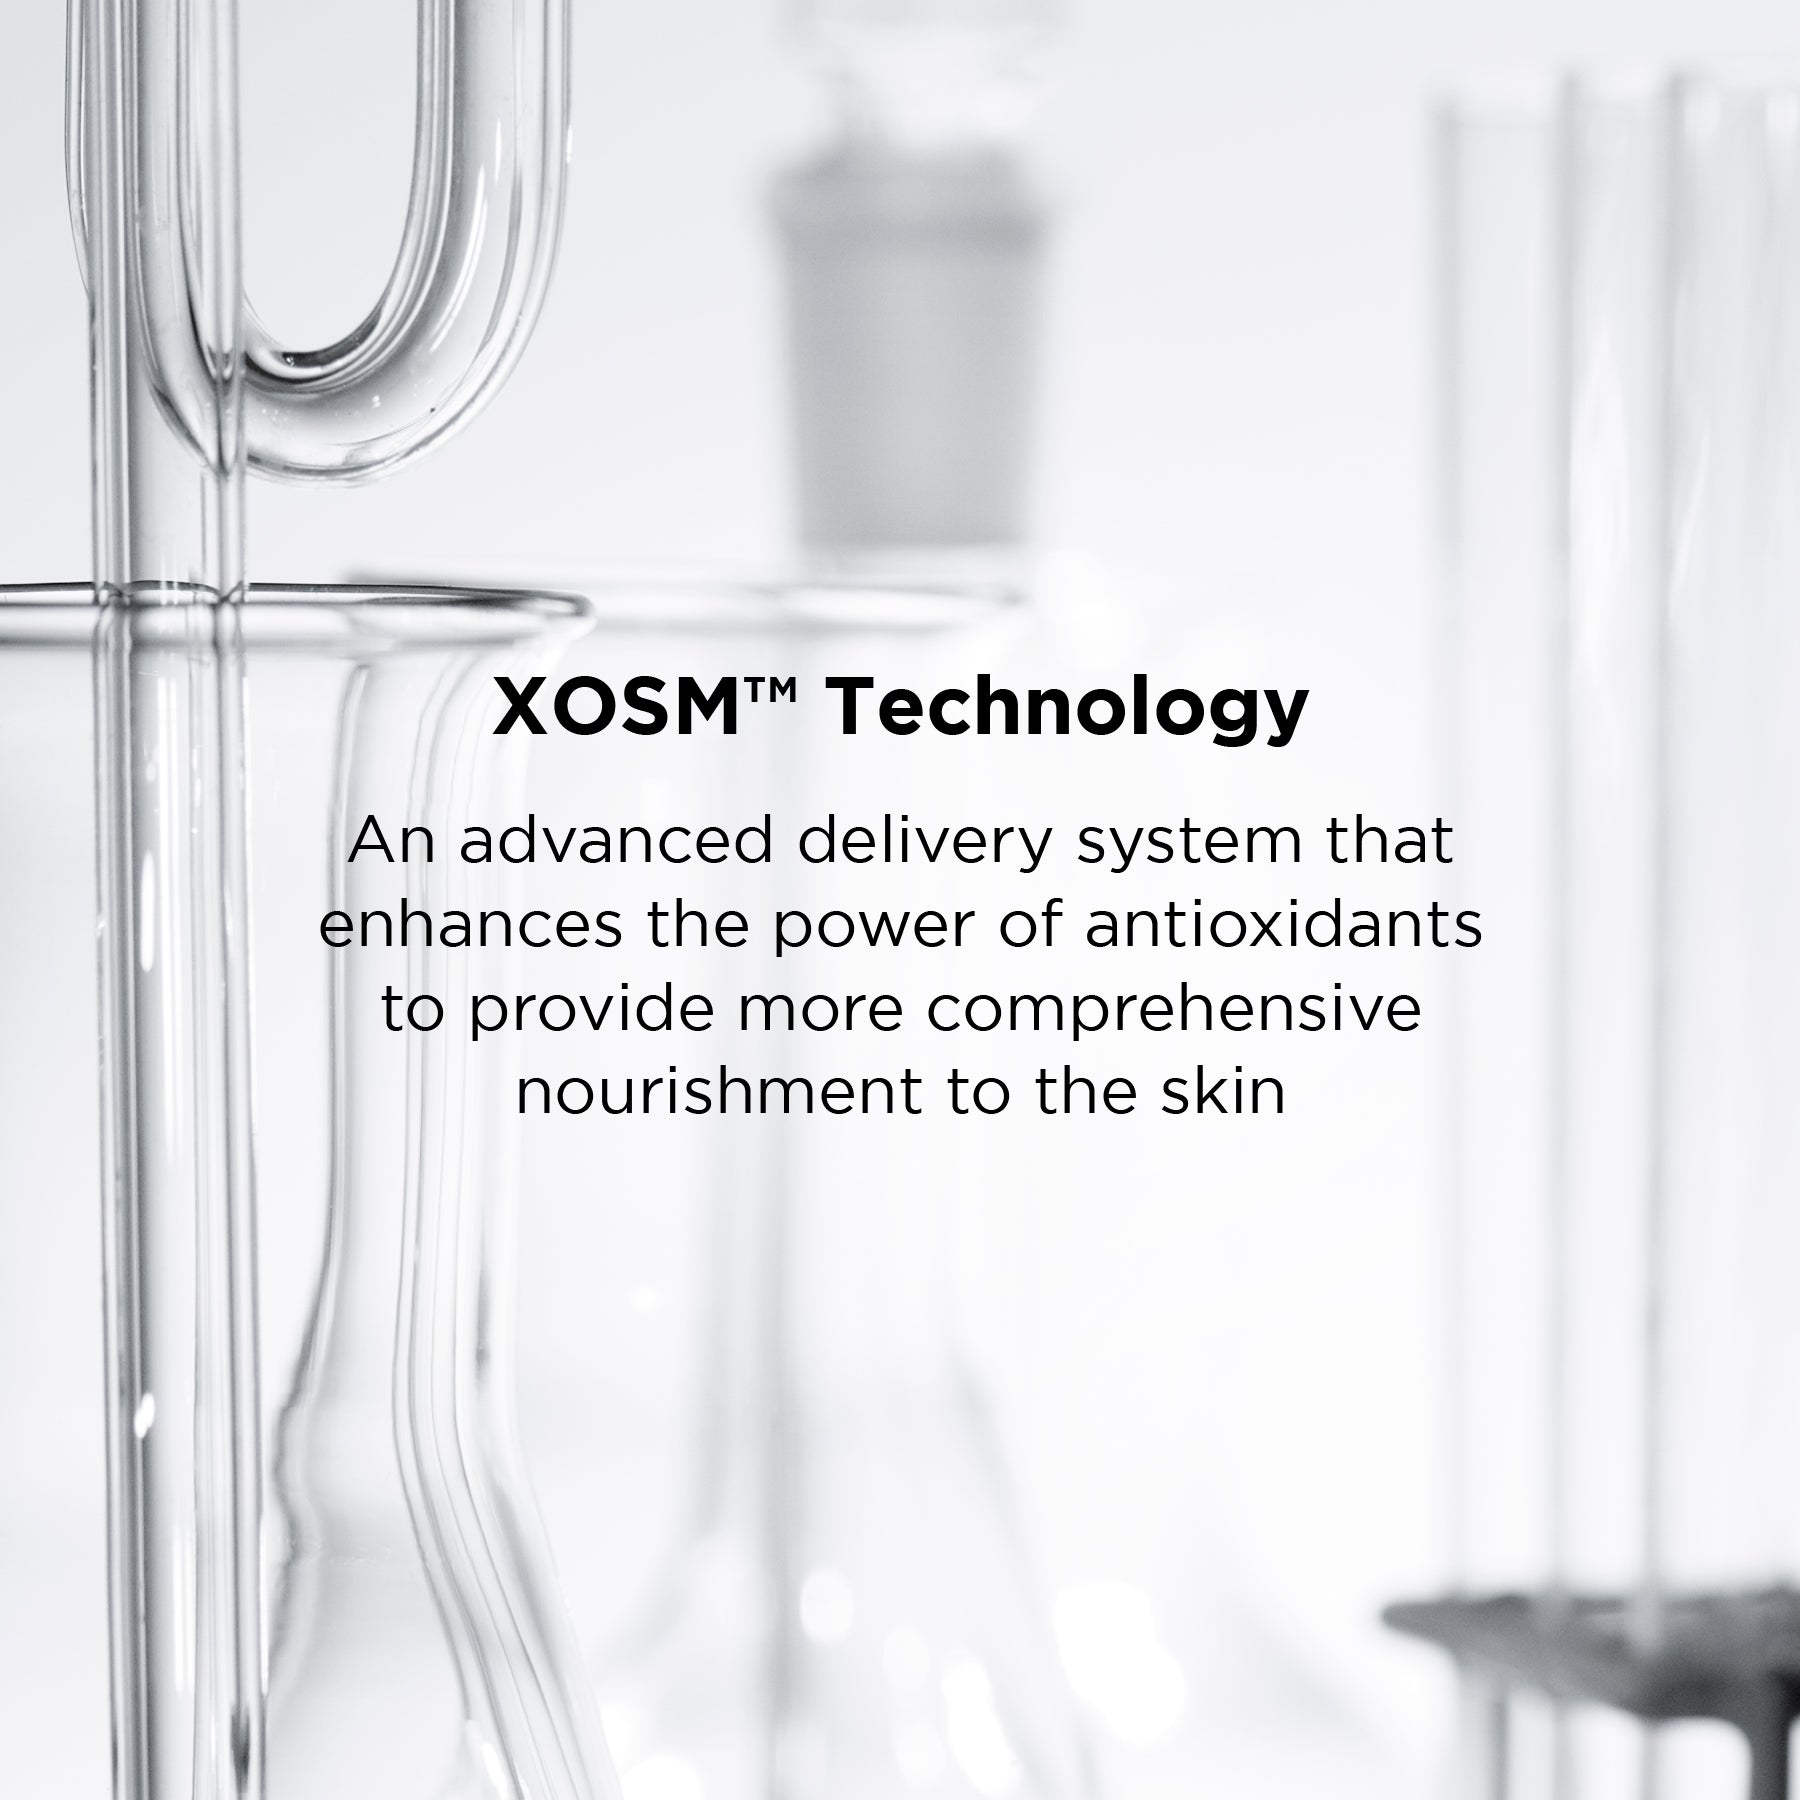 XOSM technology description